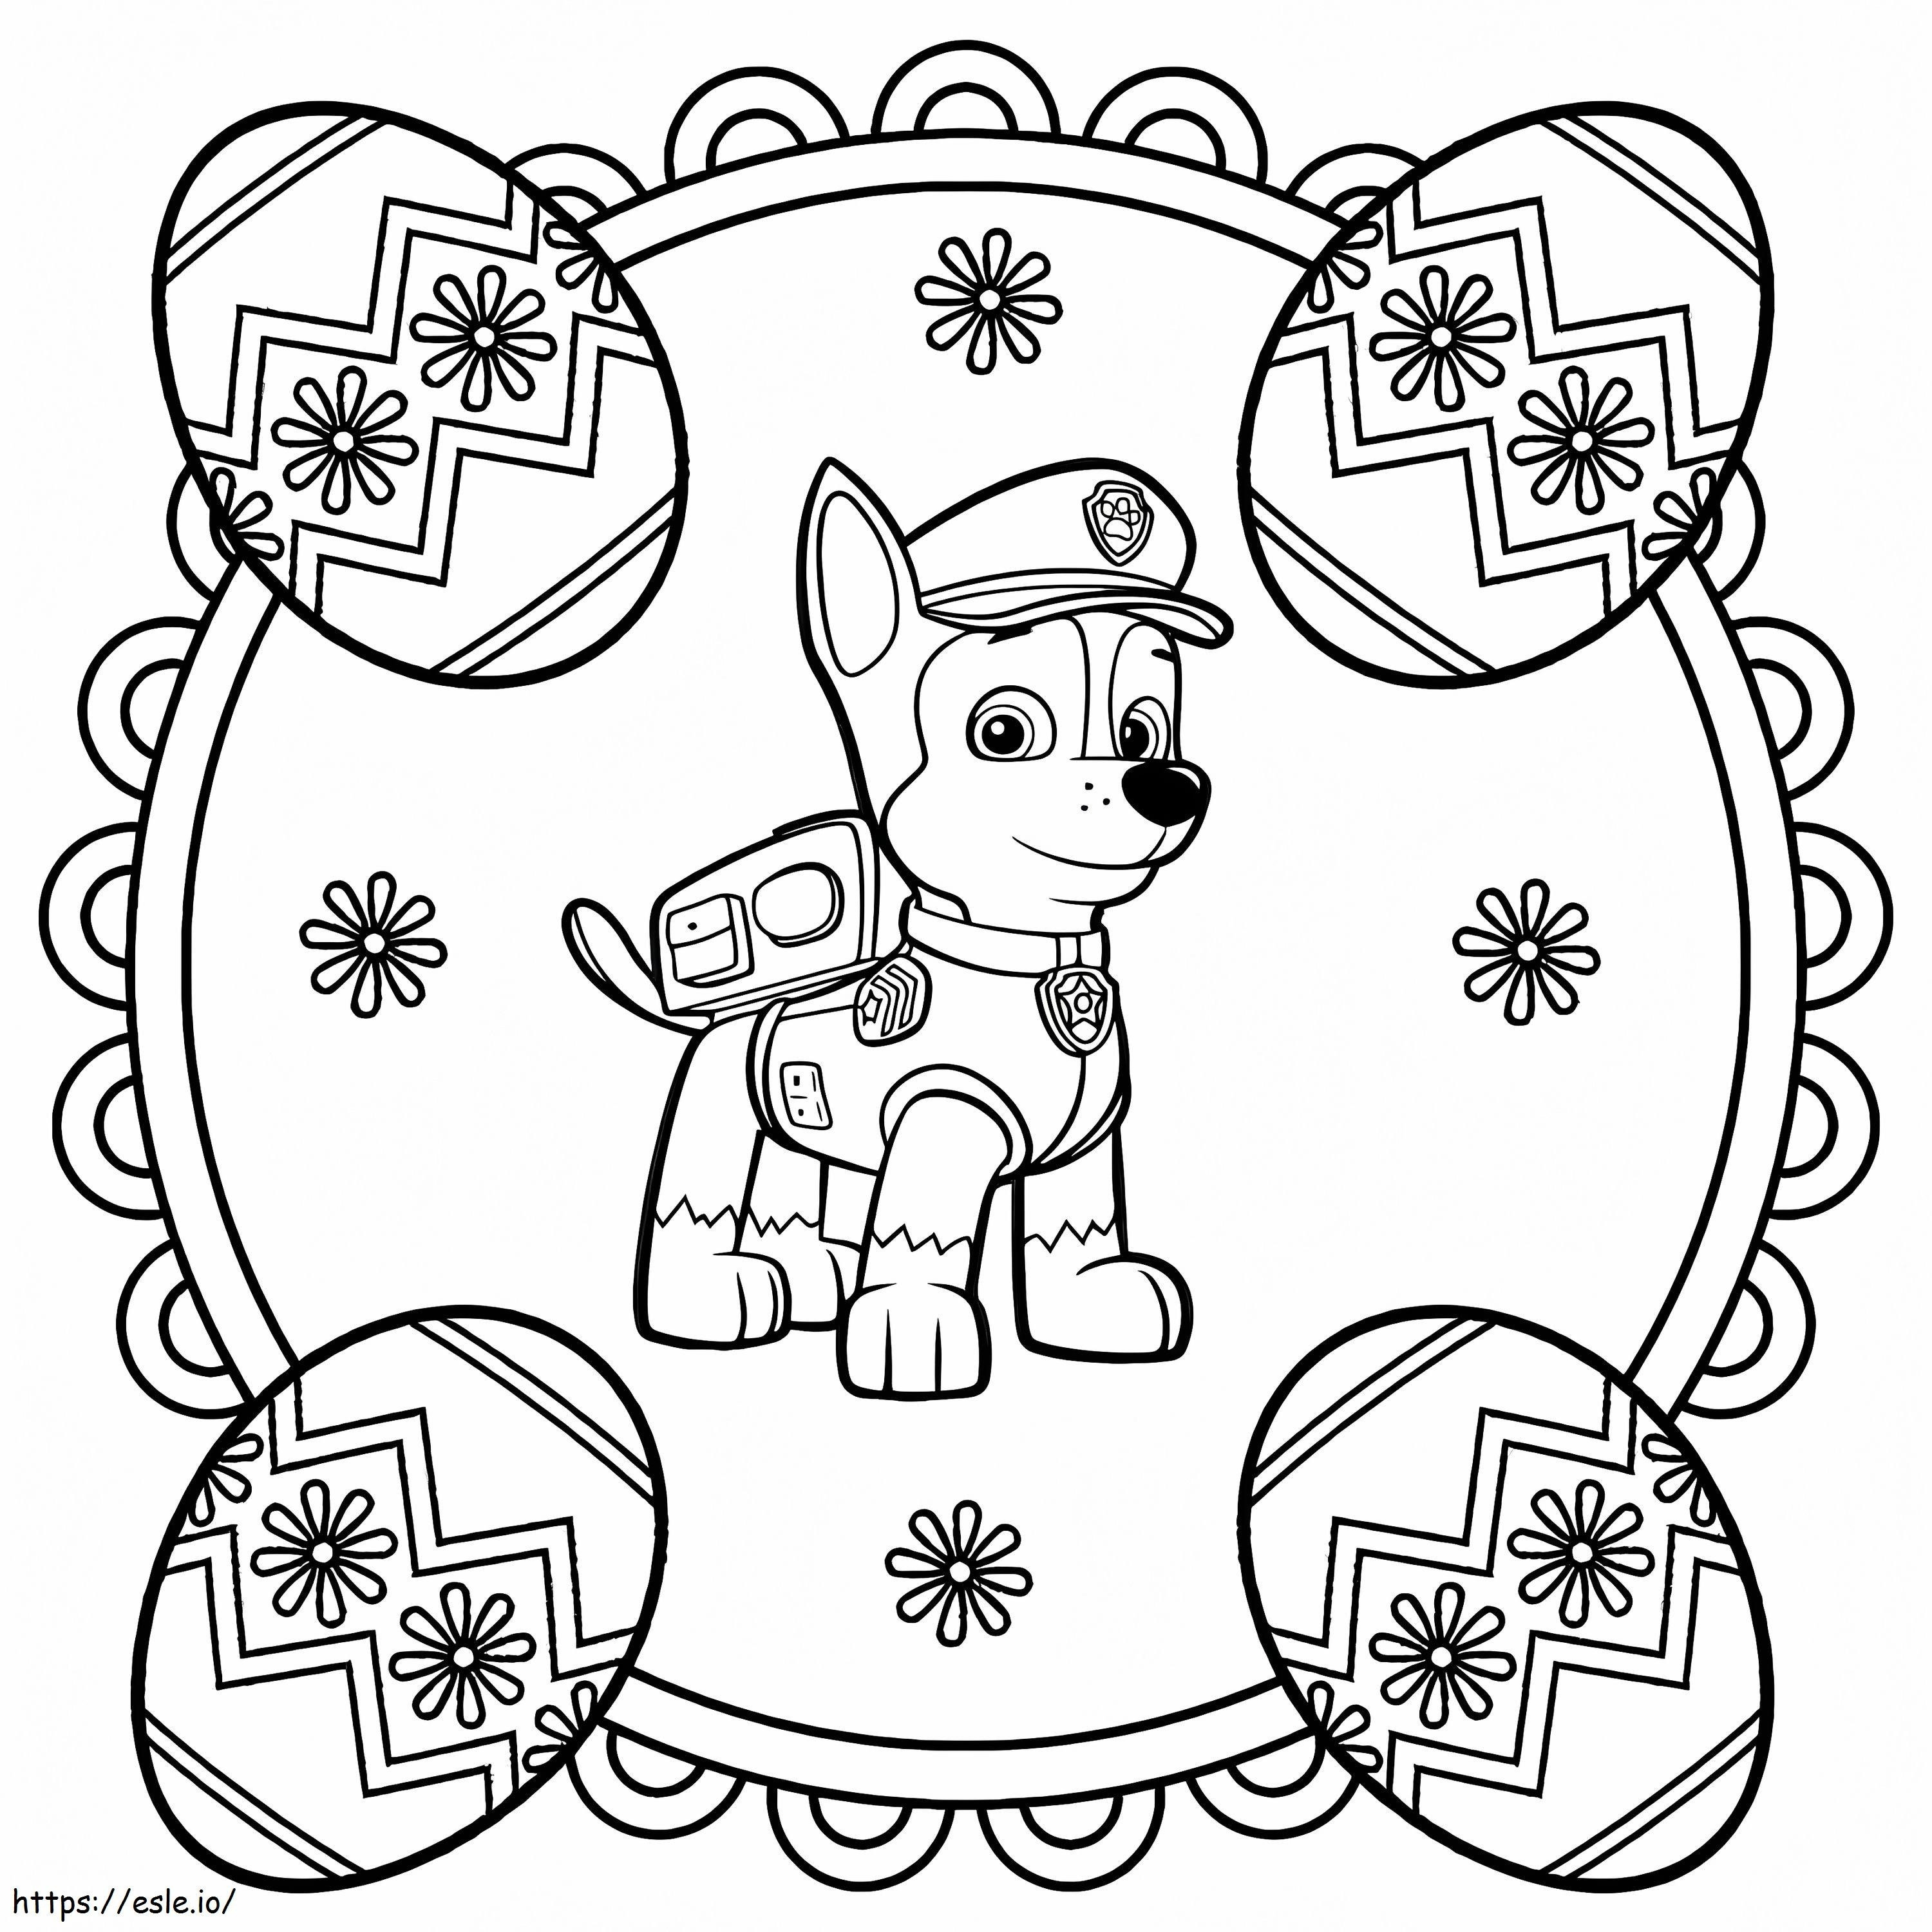 Mandala de Páscoa da Patrulha Canina para colorir